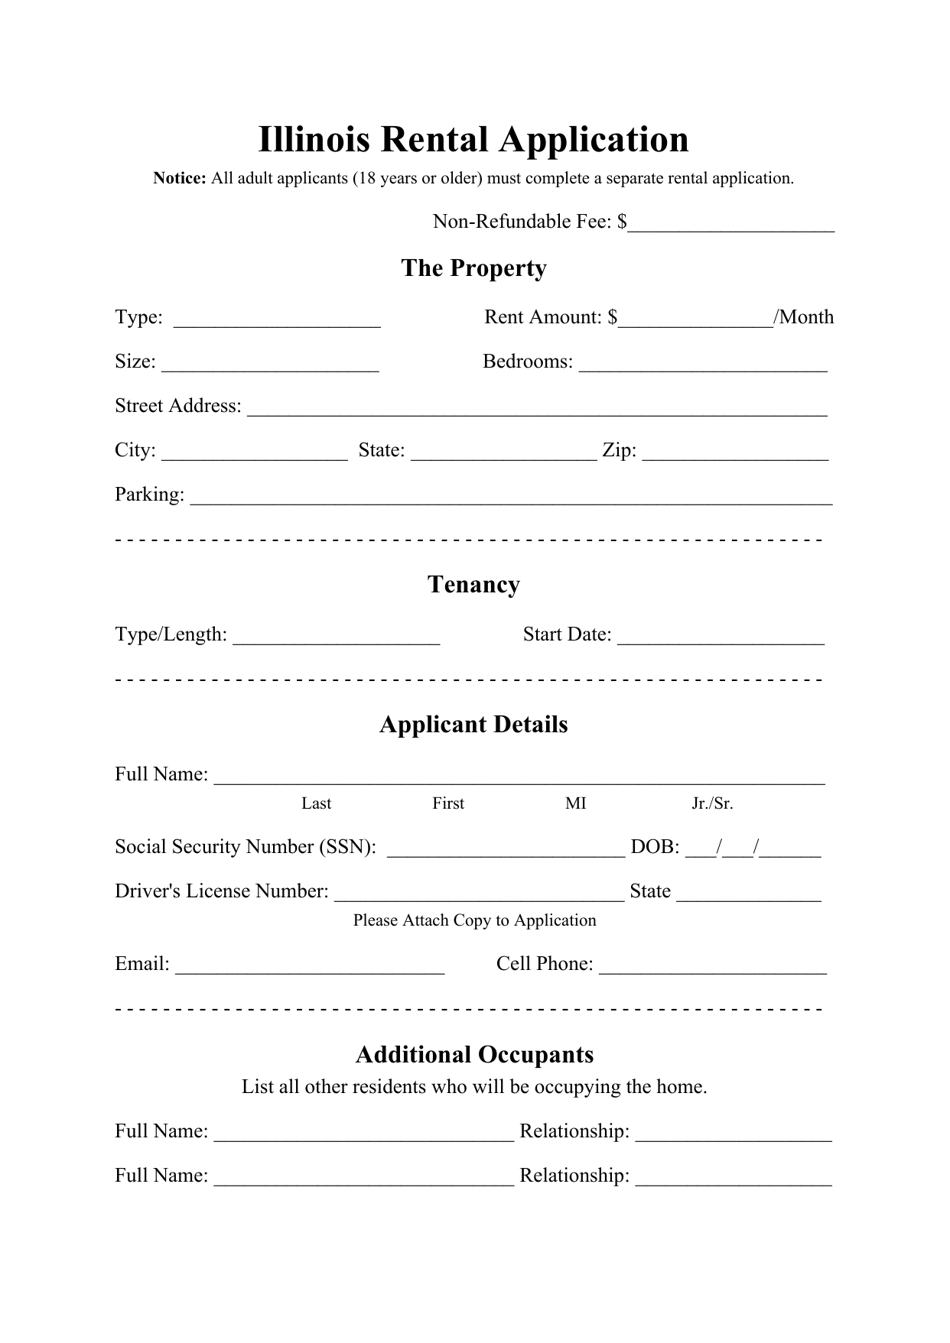 illinois rental application form download printable pdf templateroller